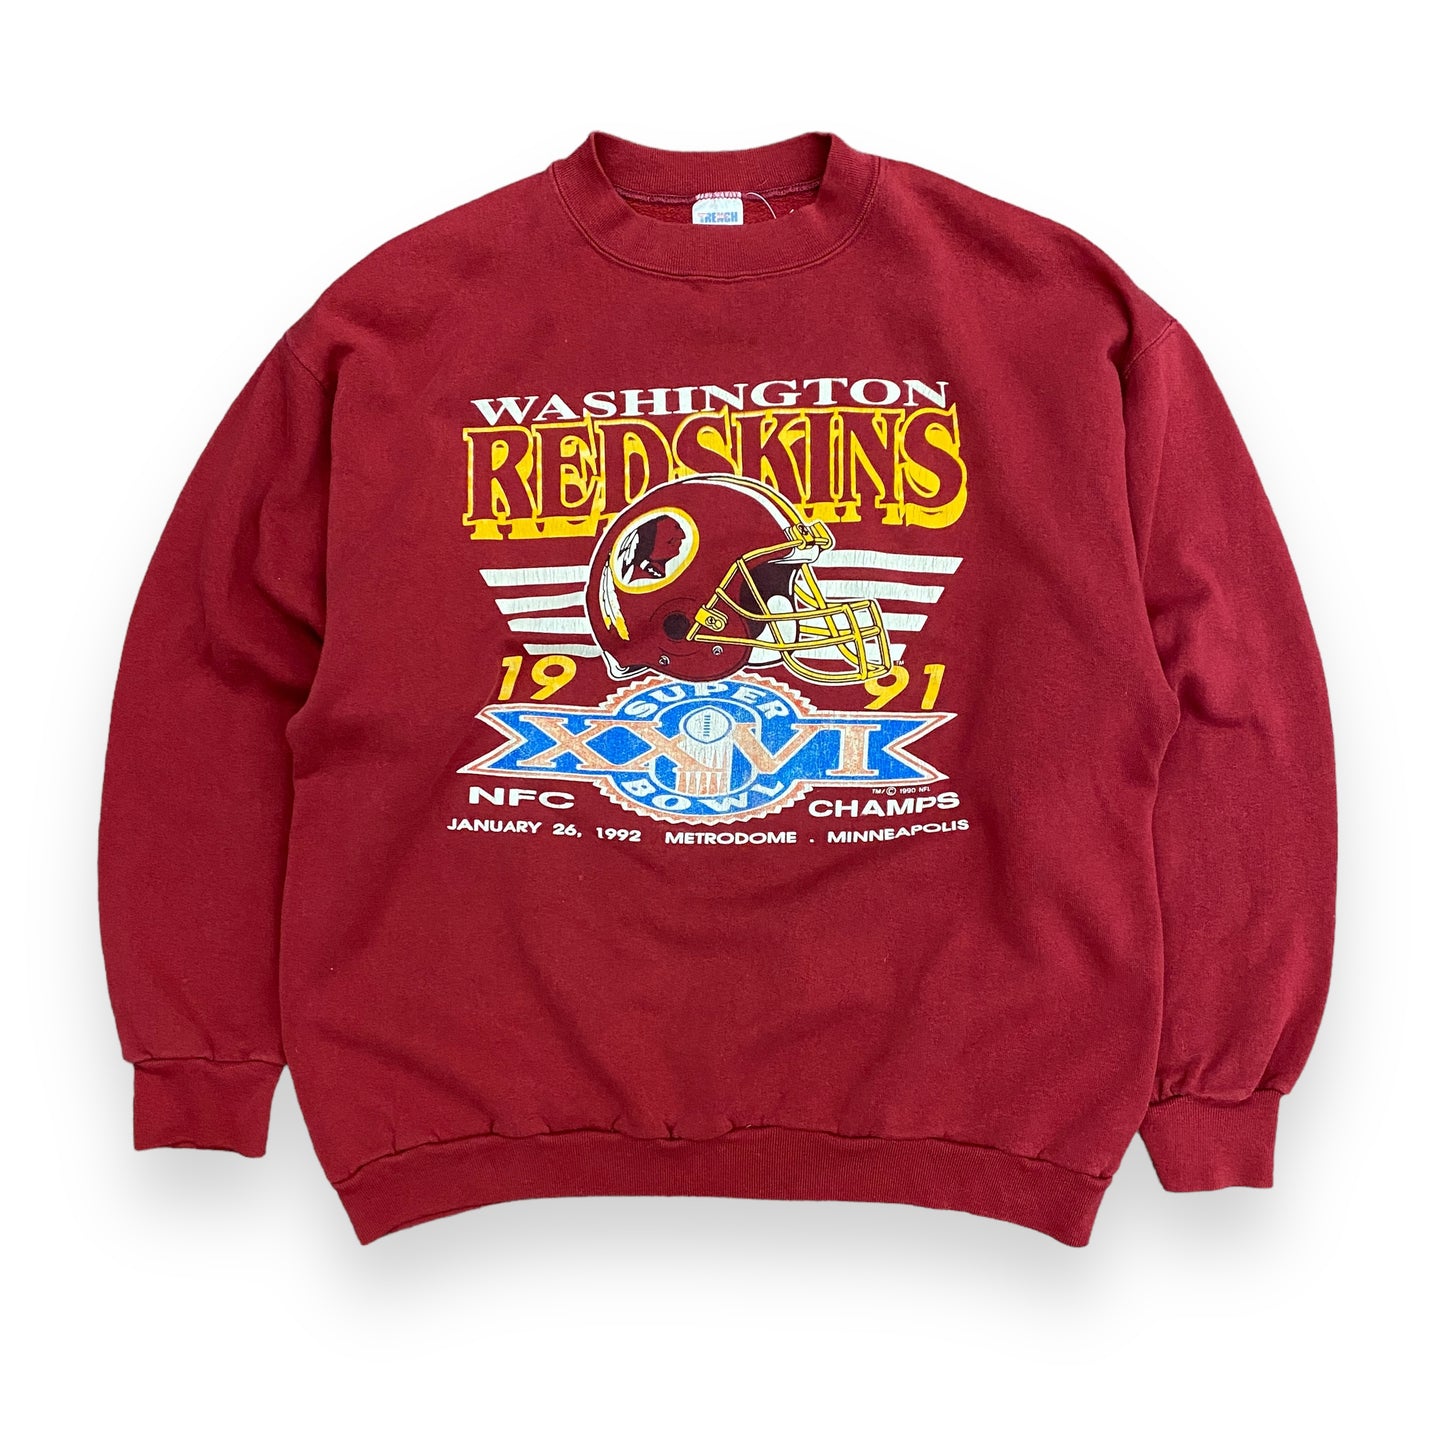 Vintage 1990s Washington Redskins Football Sweatshirt - Size XL